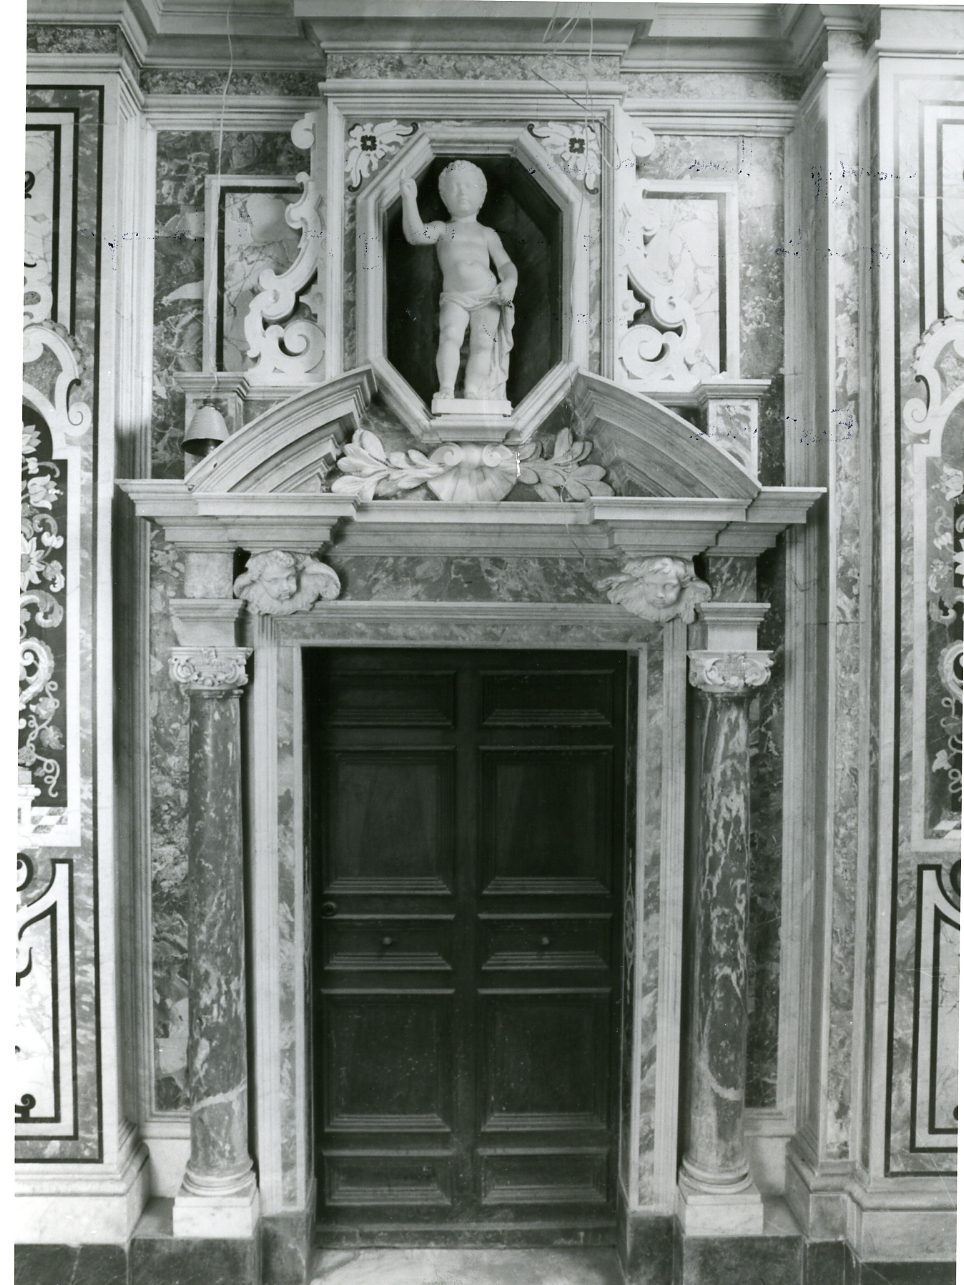 motivi decorativi vegetali con figure alate (mostra di porta, serie) di Lazzari Jacopo (sec. XVII)